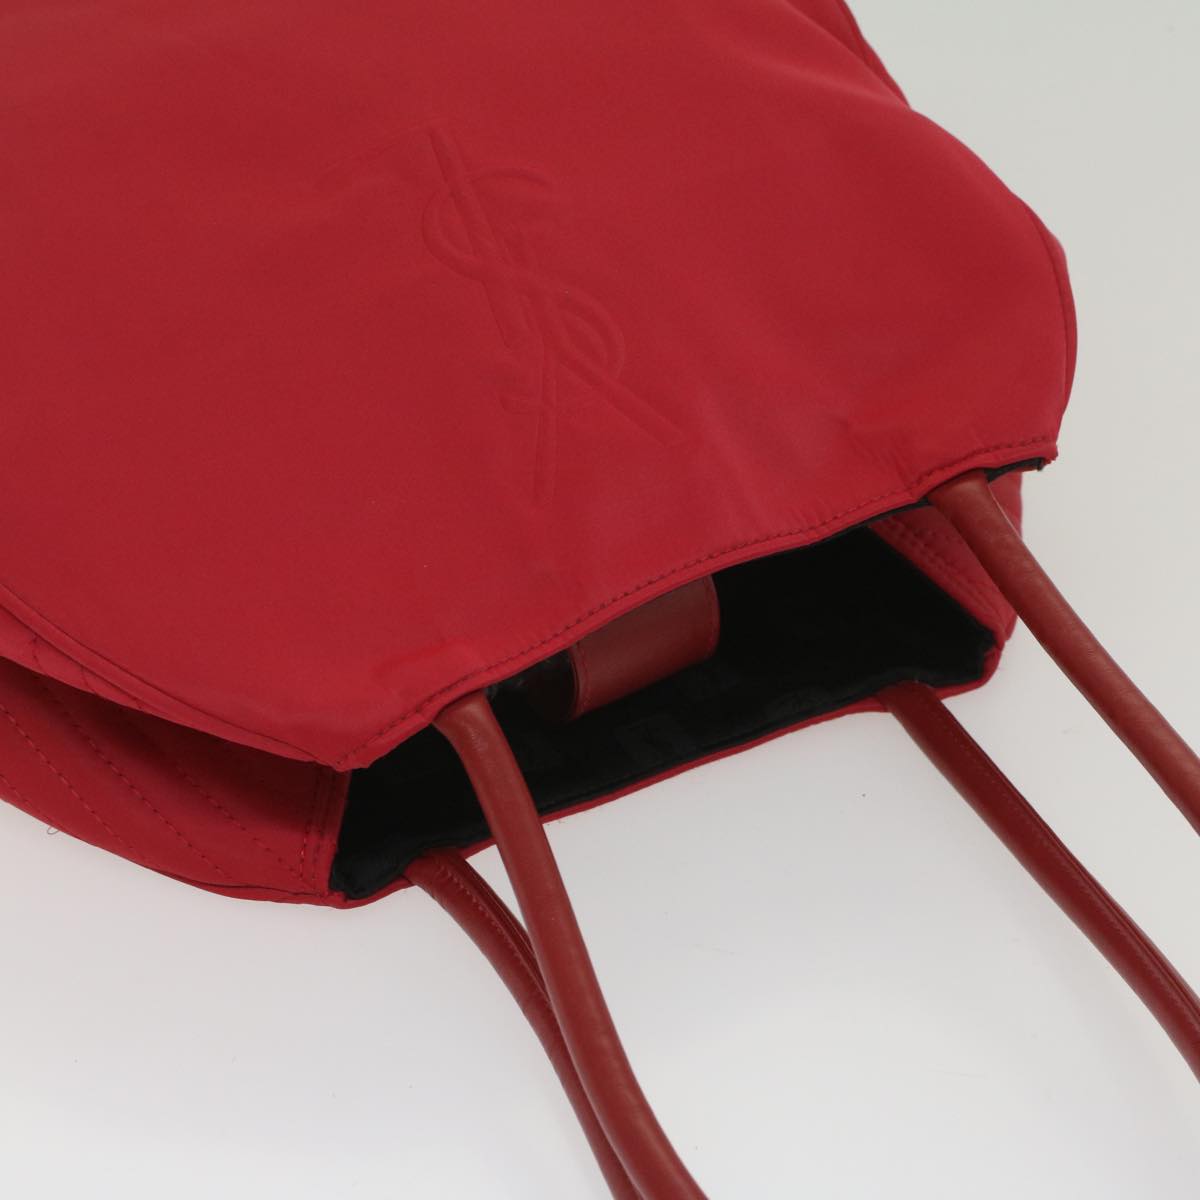 SAINT LAURENT Shoulder Bag Leather Red Auth bs8708